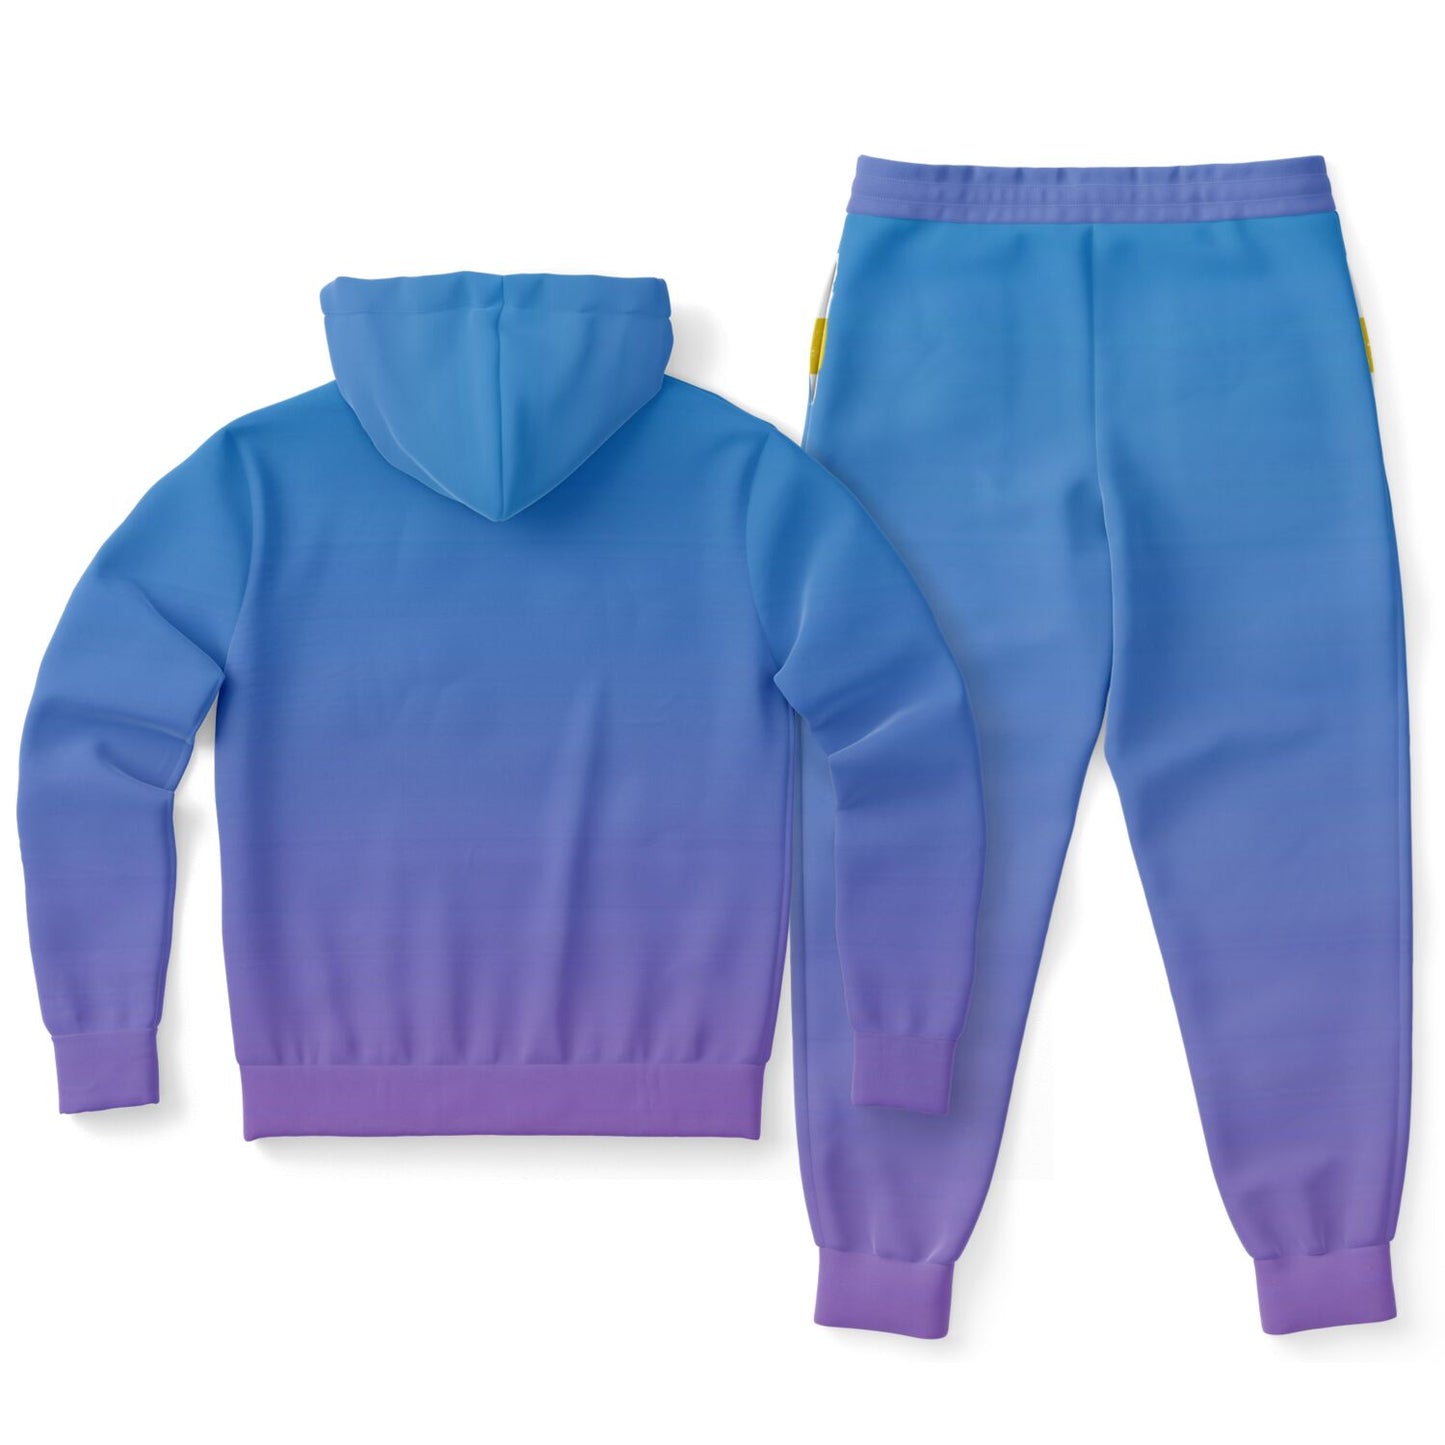 LSJ Sweat Suit Blue/Purple